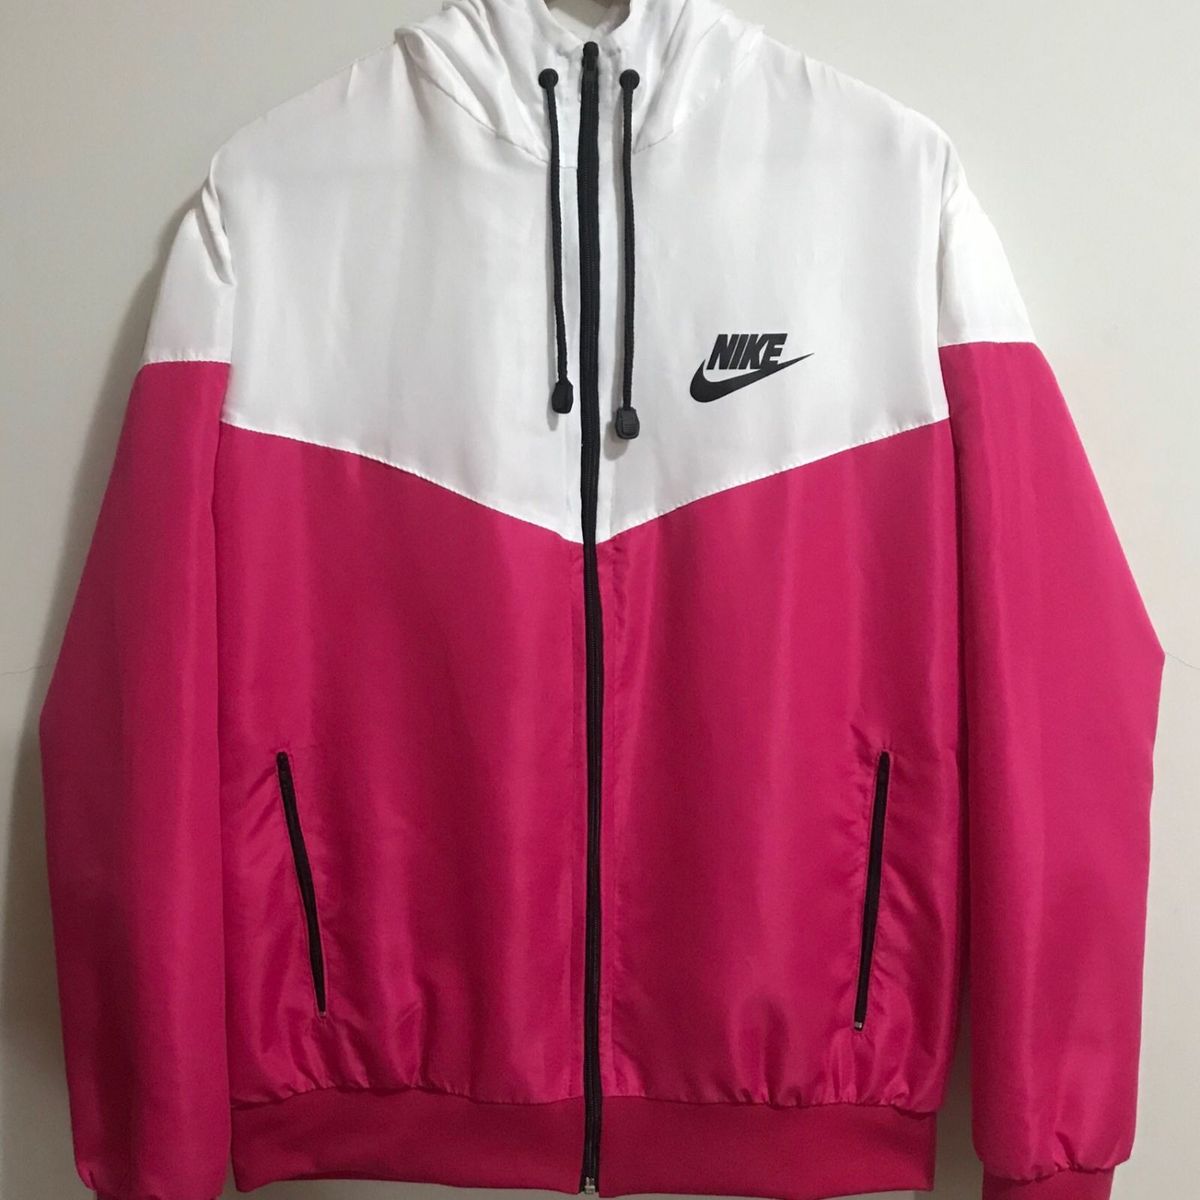 jaqueta nike rosa e branco